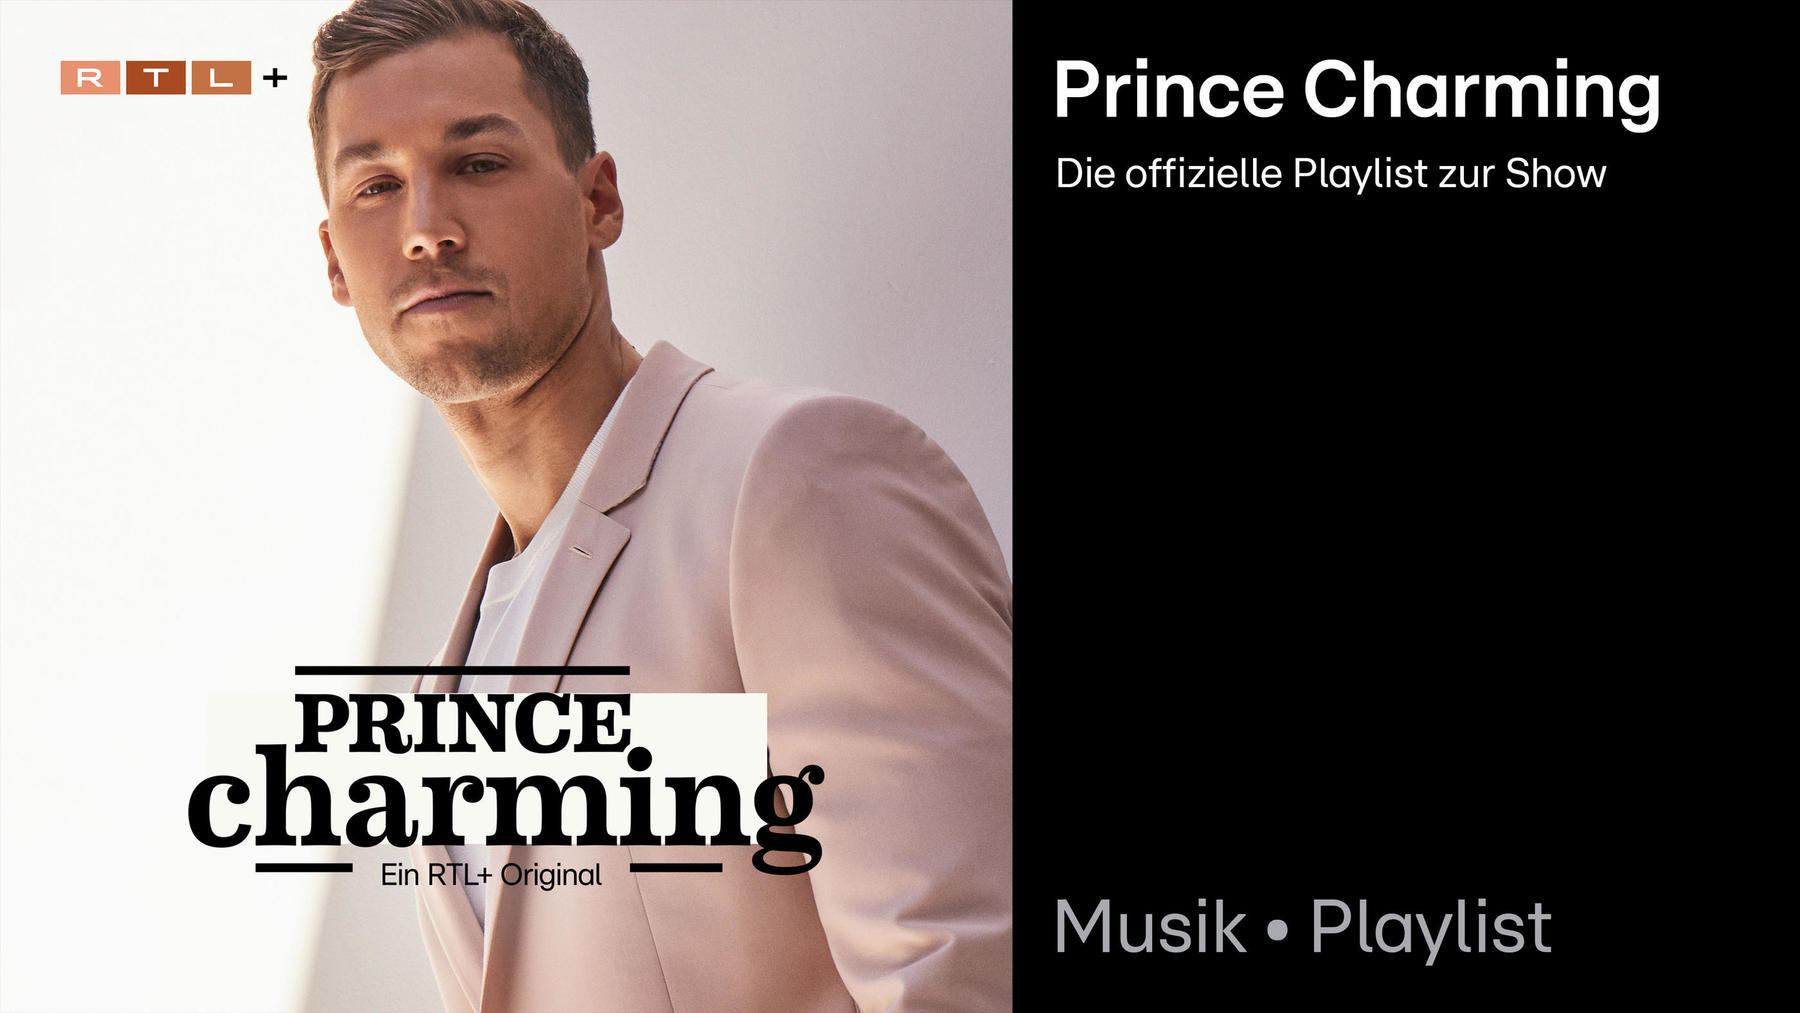 Prince Charming 2022 Playlist